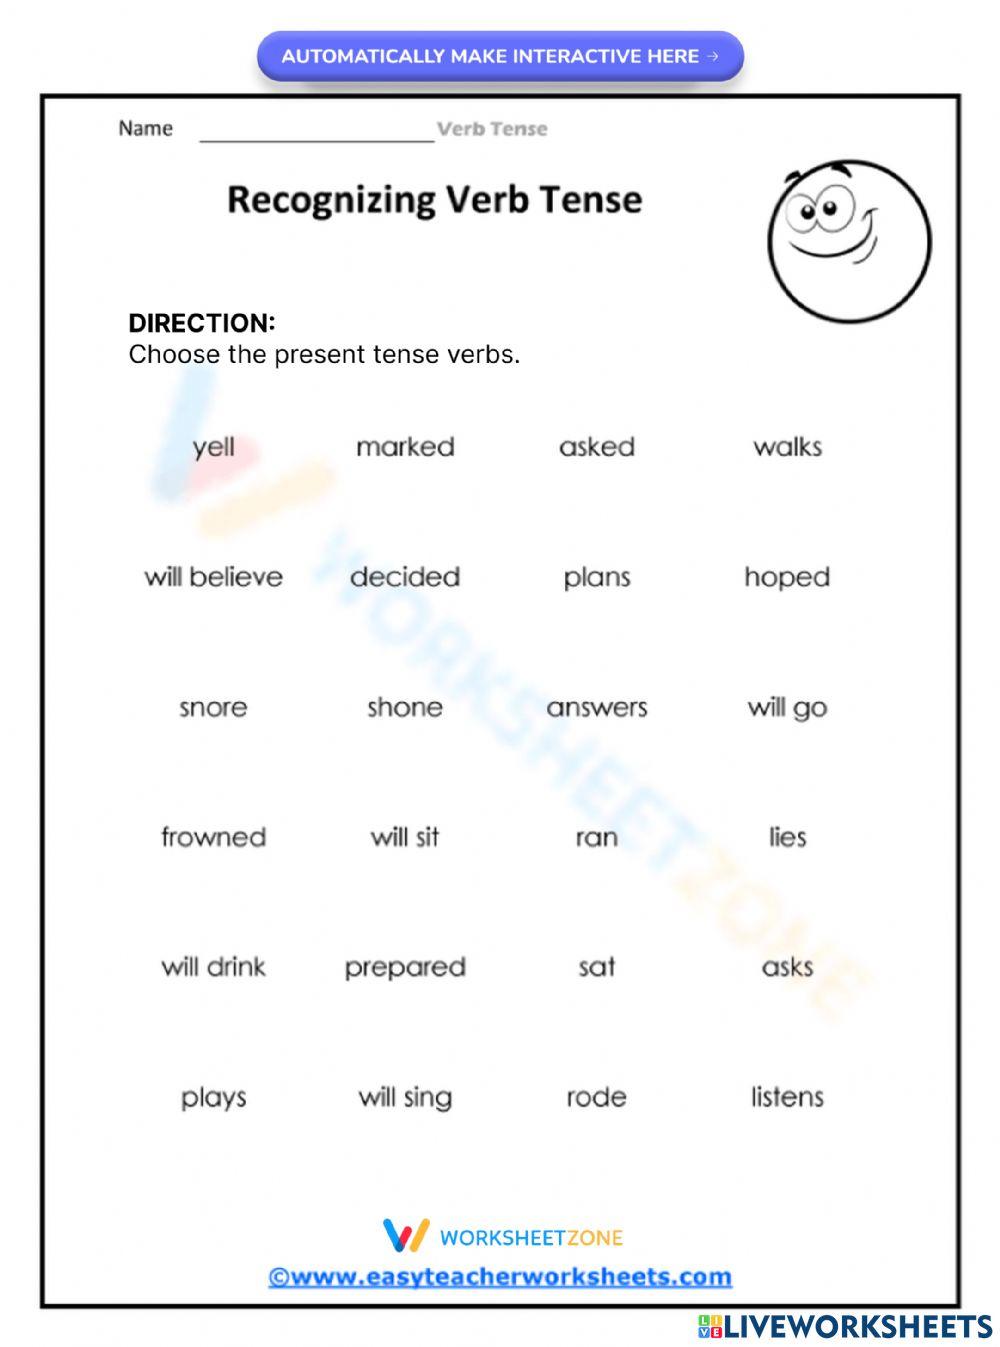 Recognizing Verb Tense